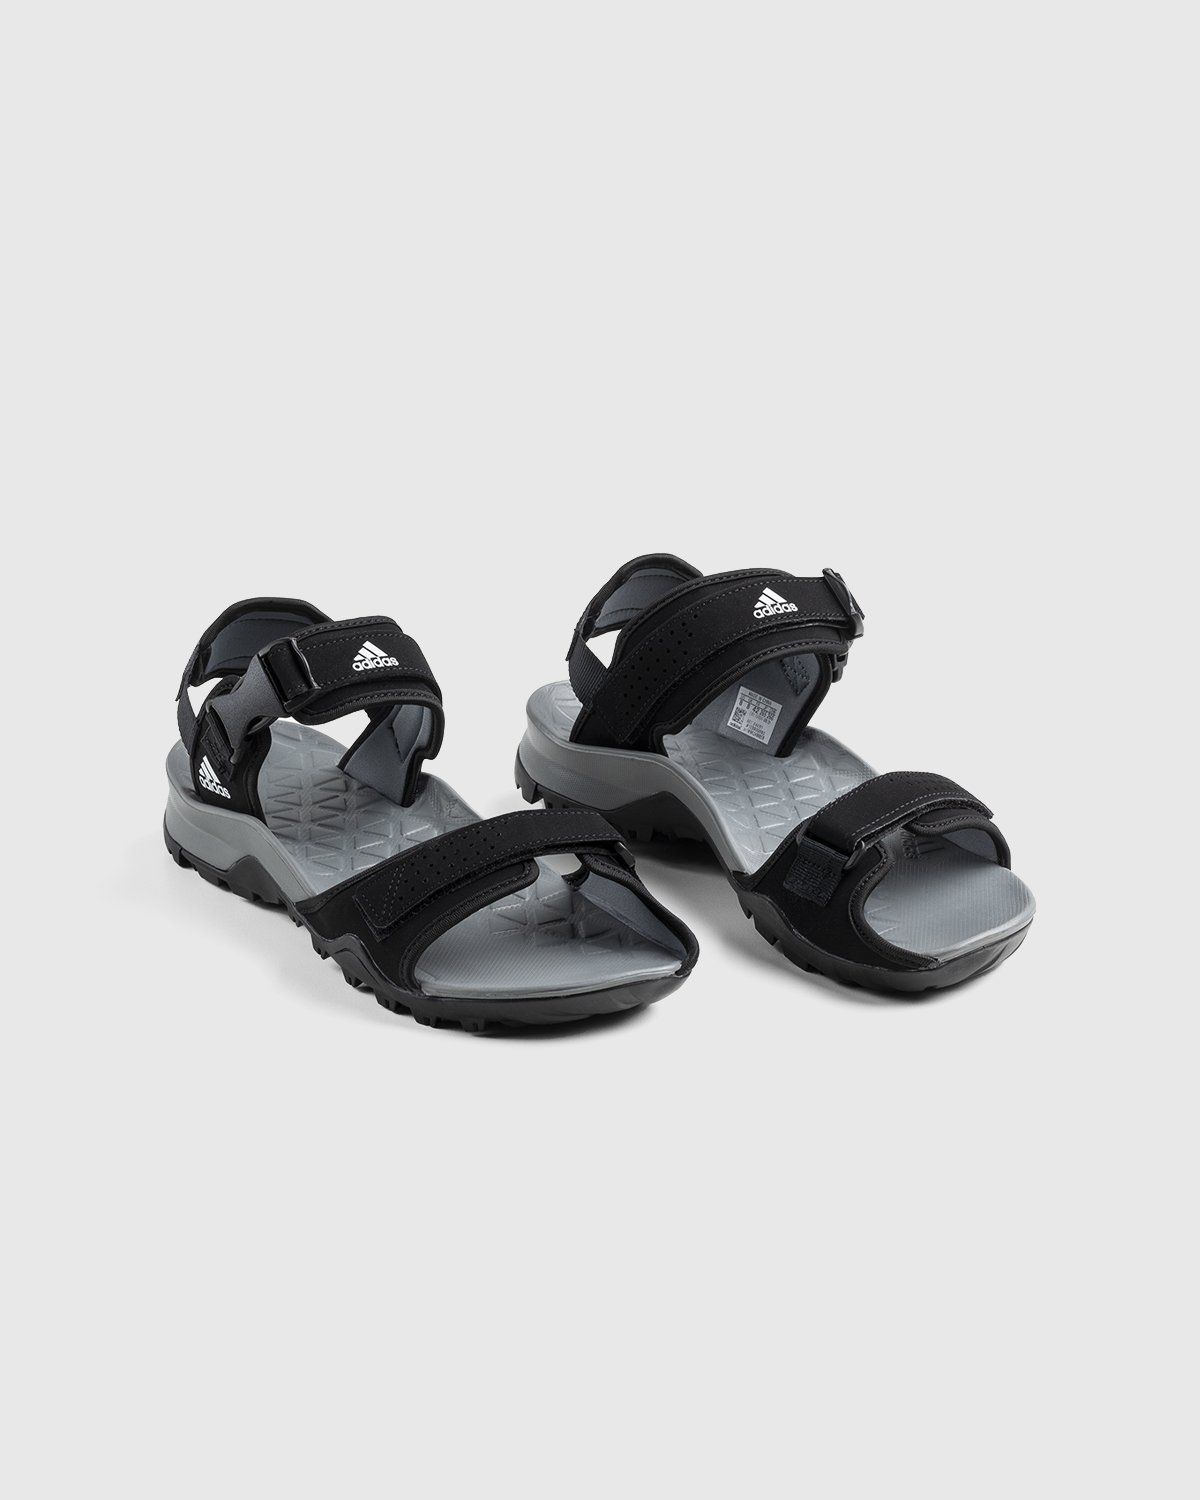 Adidas – Cyprex Ultra II Sandals Core Black Vista Grey Cloud White - Sandals - Black - Image 3